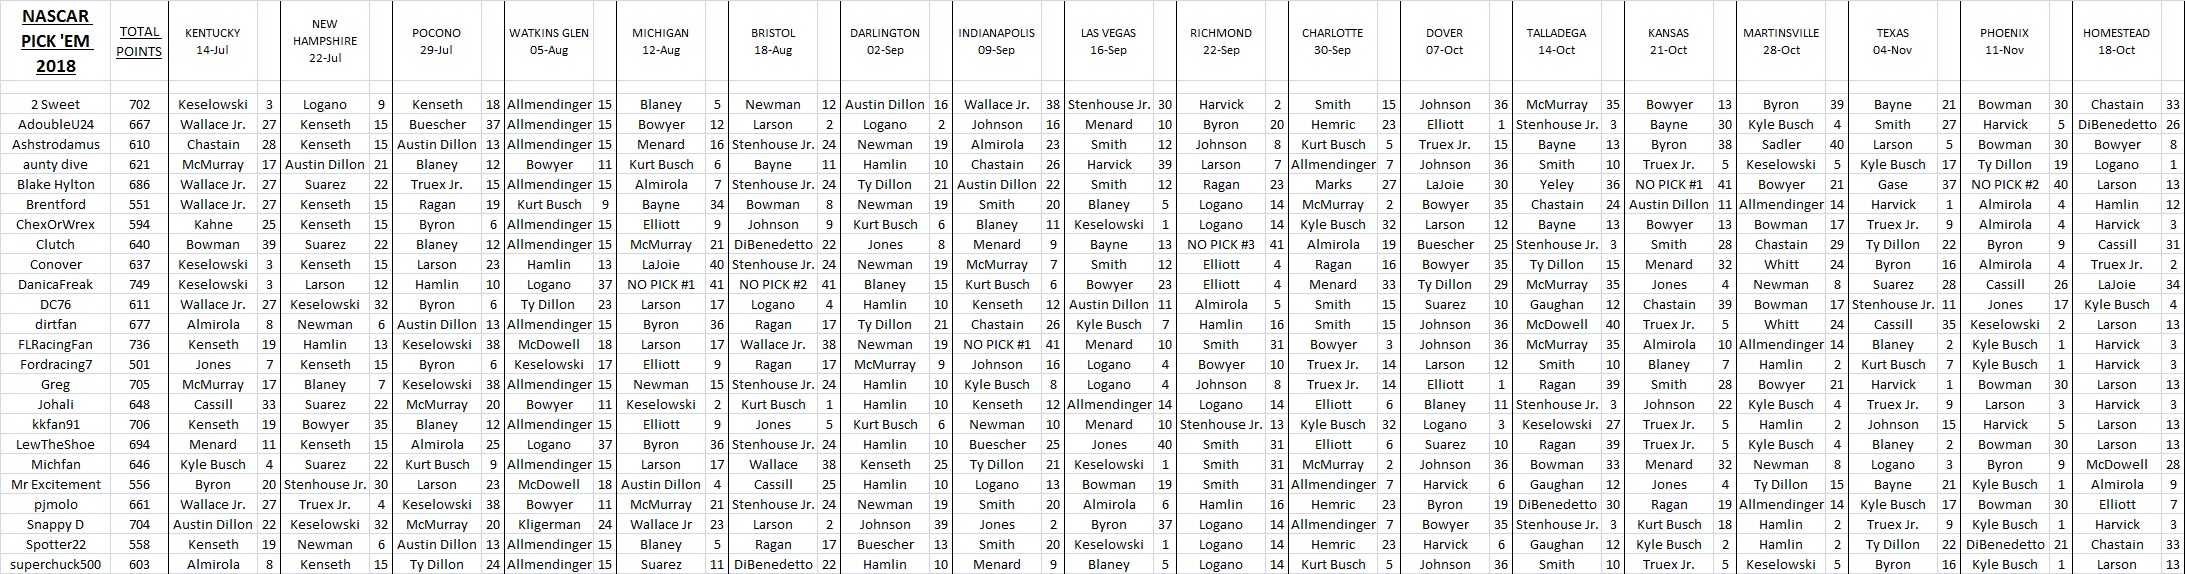 2018 Pick 'Em picks spreadsheet - 19 thru 36 (B+W).jpg